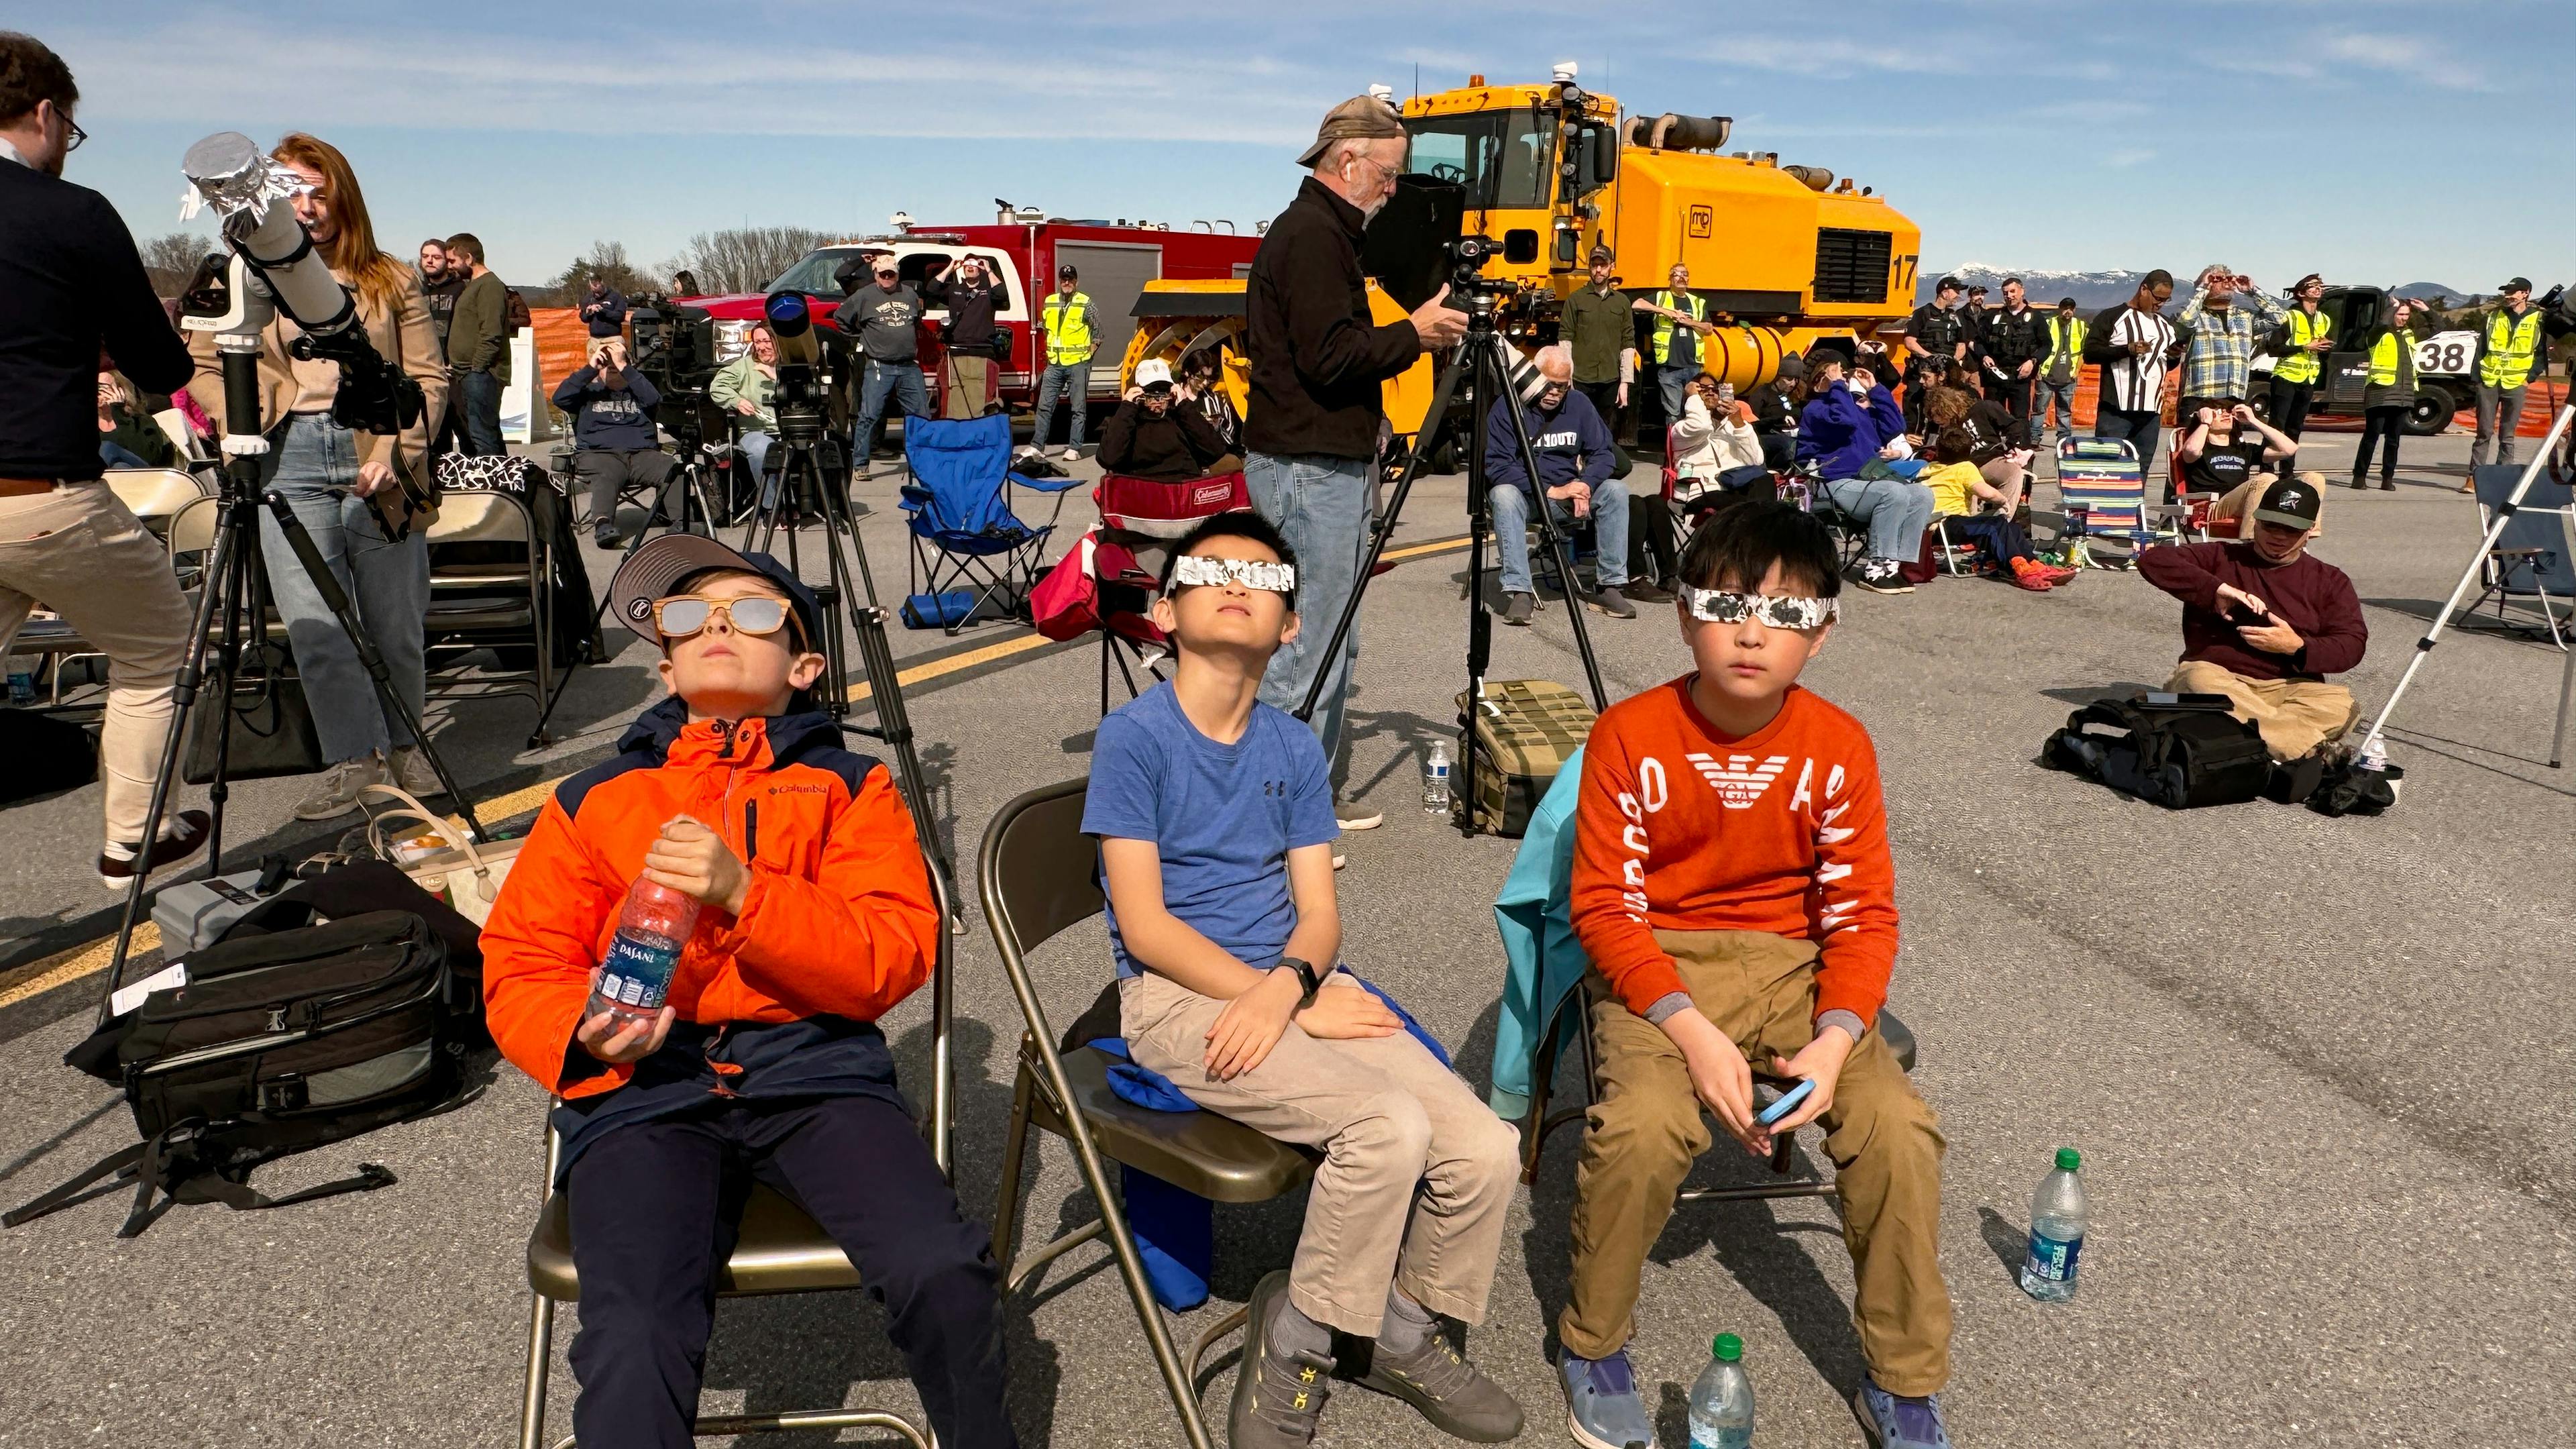 Curious kids watching partial eclipse using safe solar eclipse glasses. Credit: Sævar Helgi Bragason